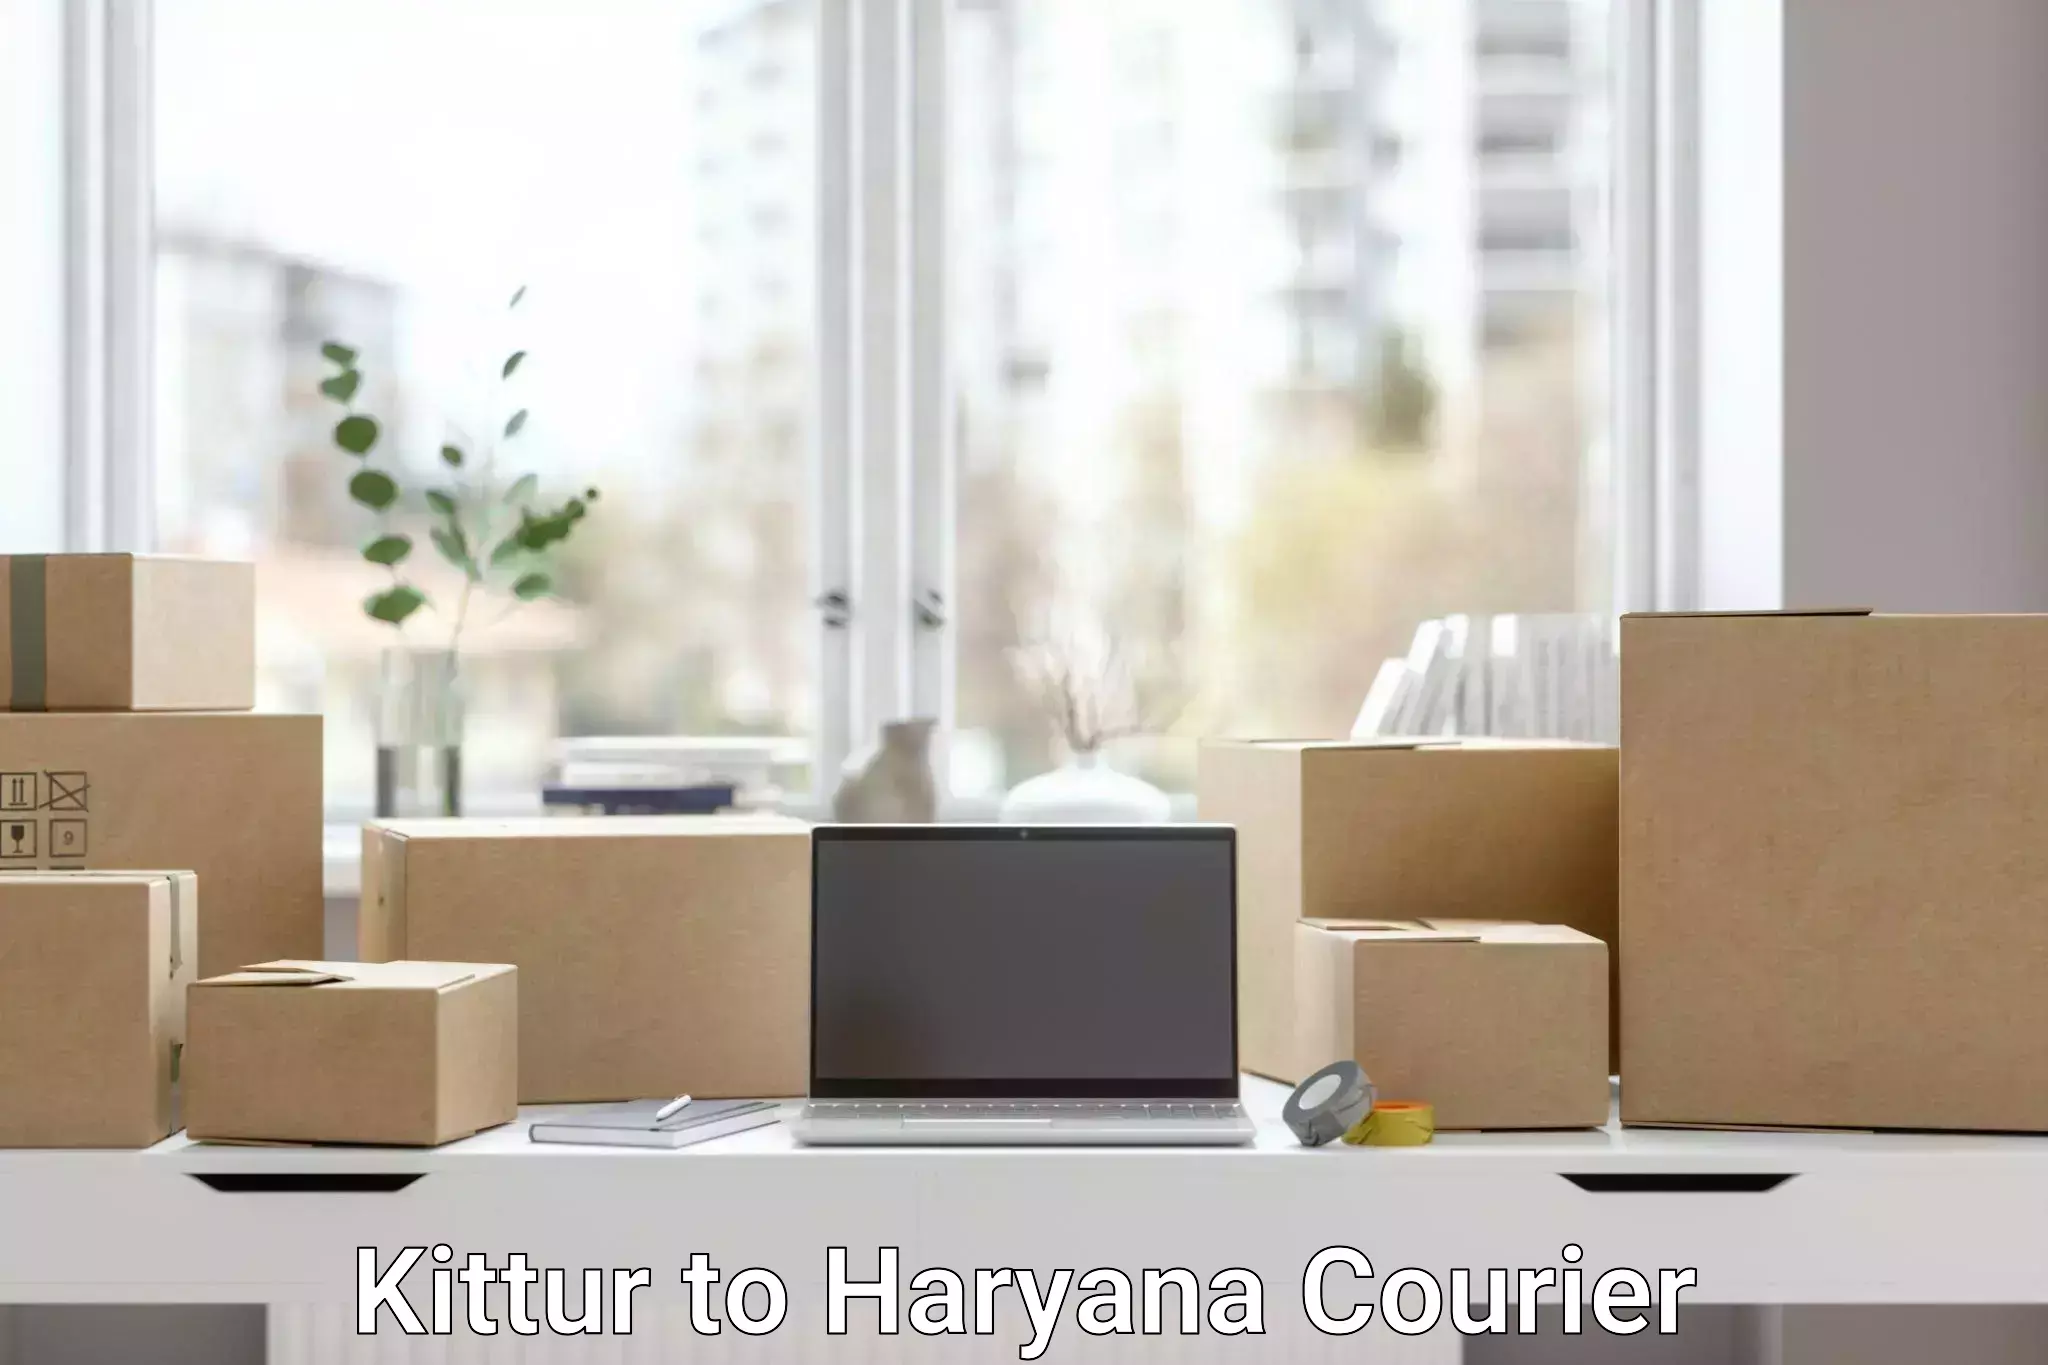 Online package tracking Kittur to Sonipat